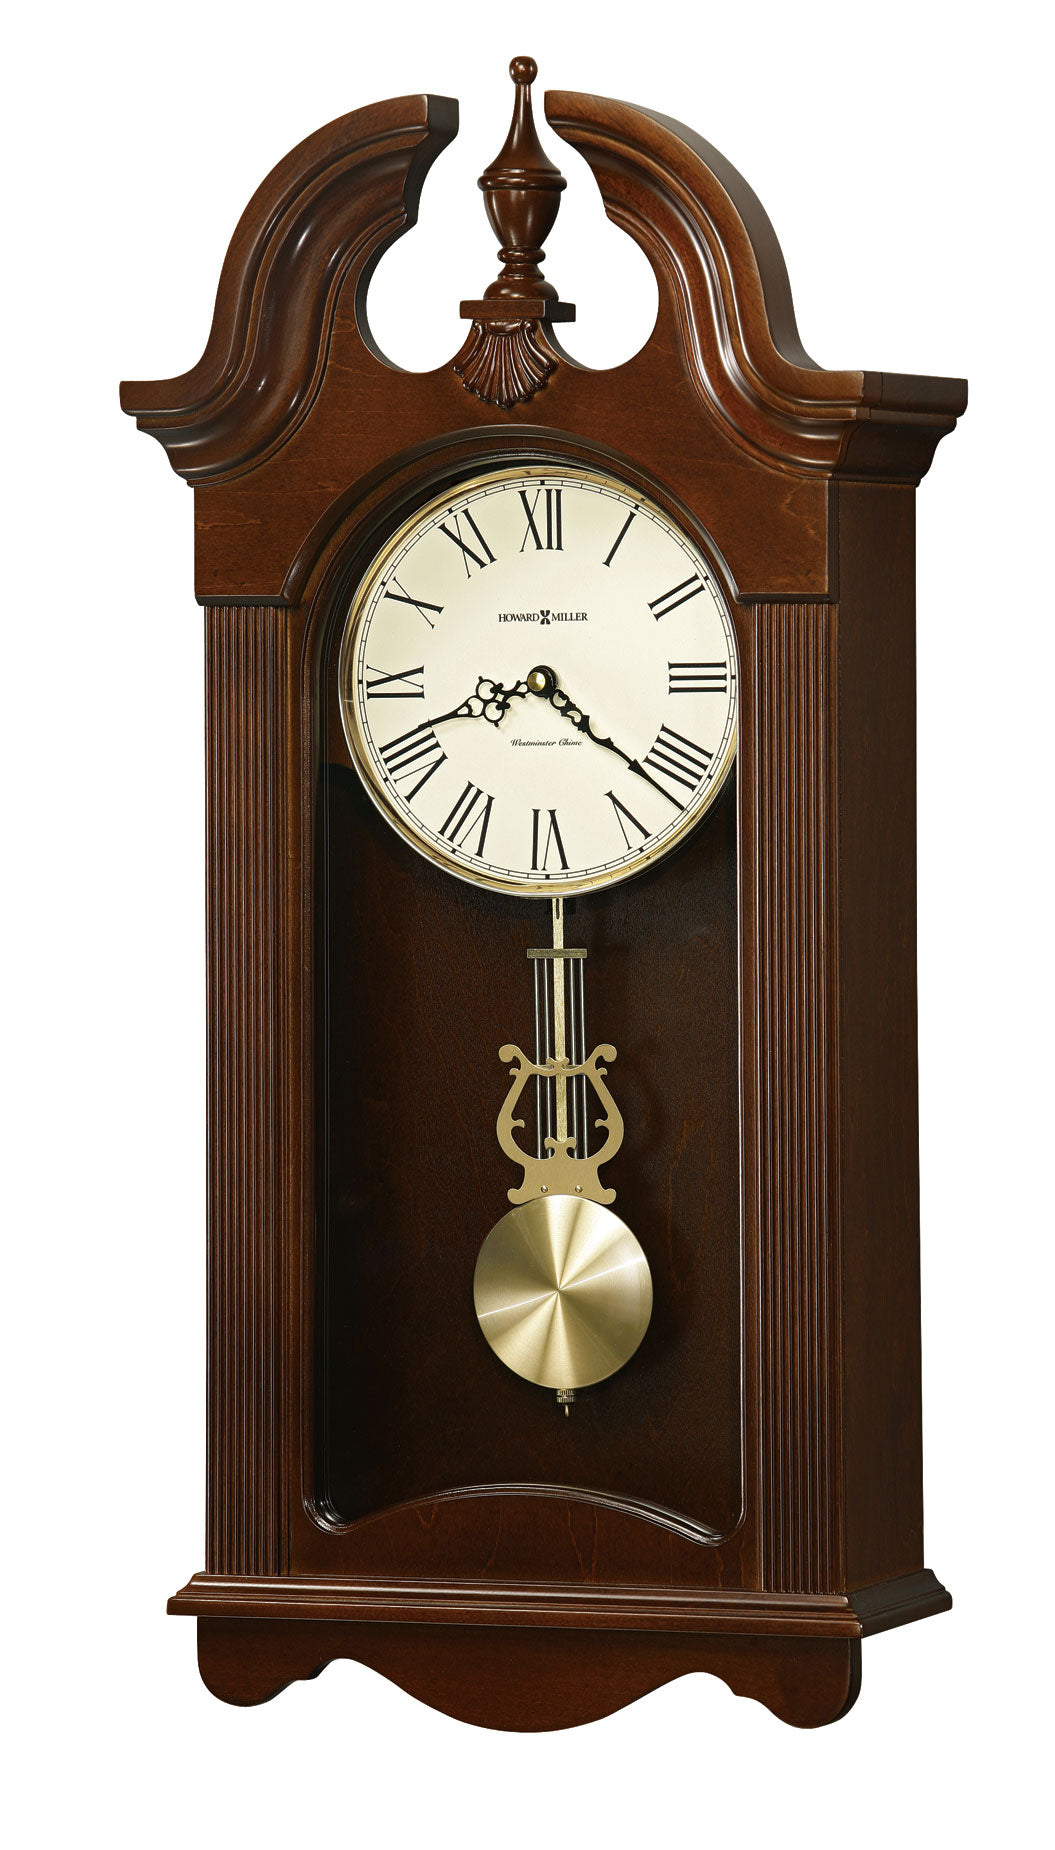 Malia Wall Clock by Howard Miller